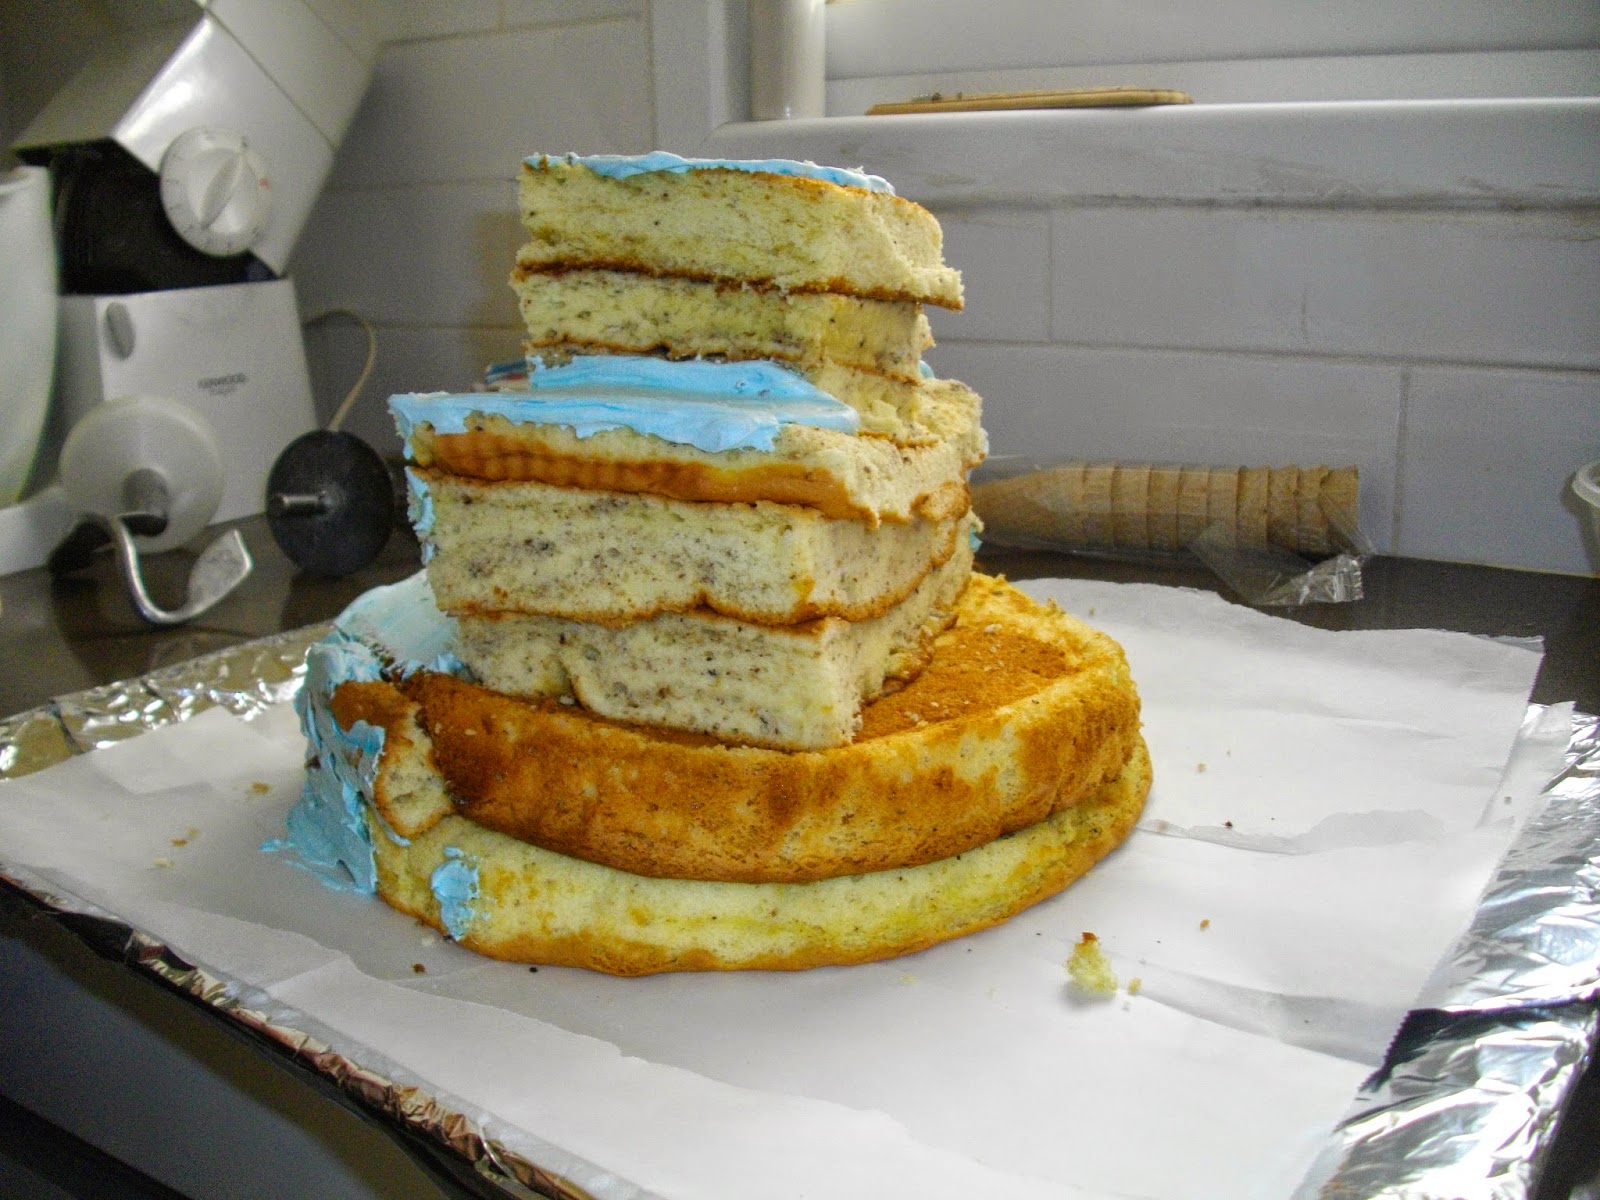 IMGP2860 - עוגת יומולדת בצורת ארמון